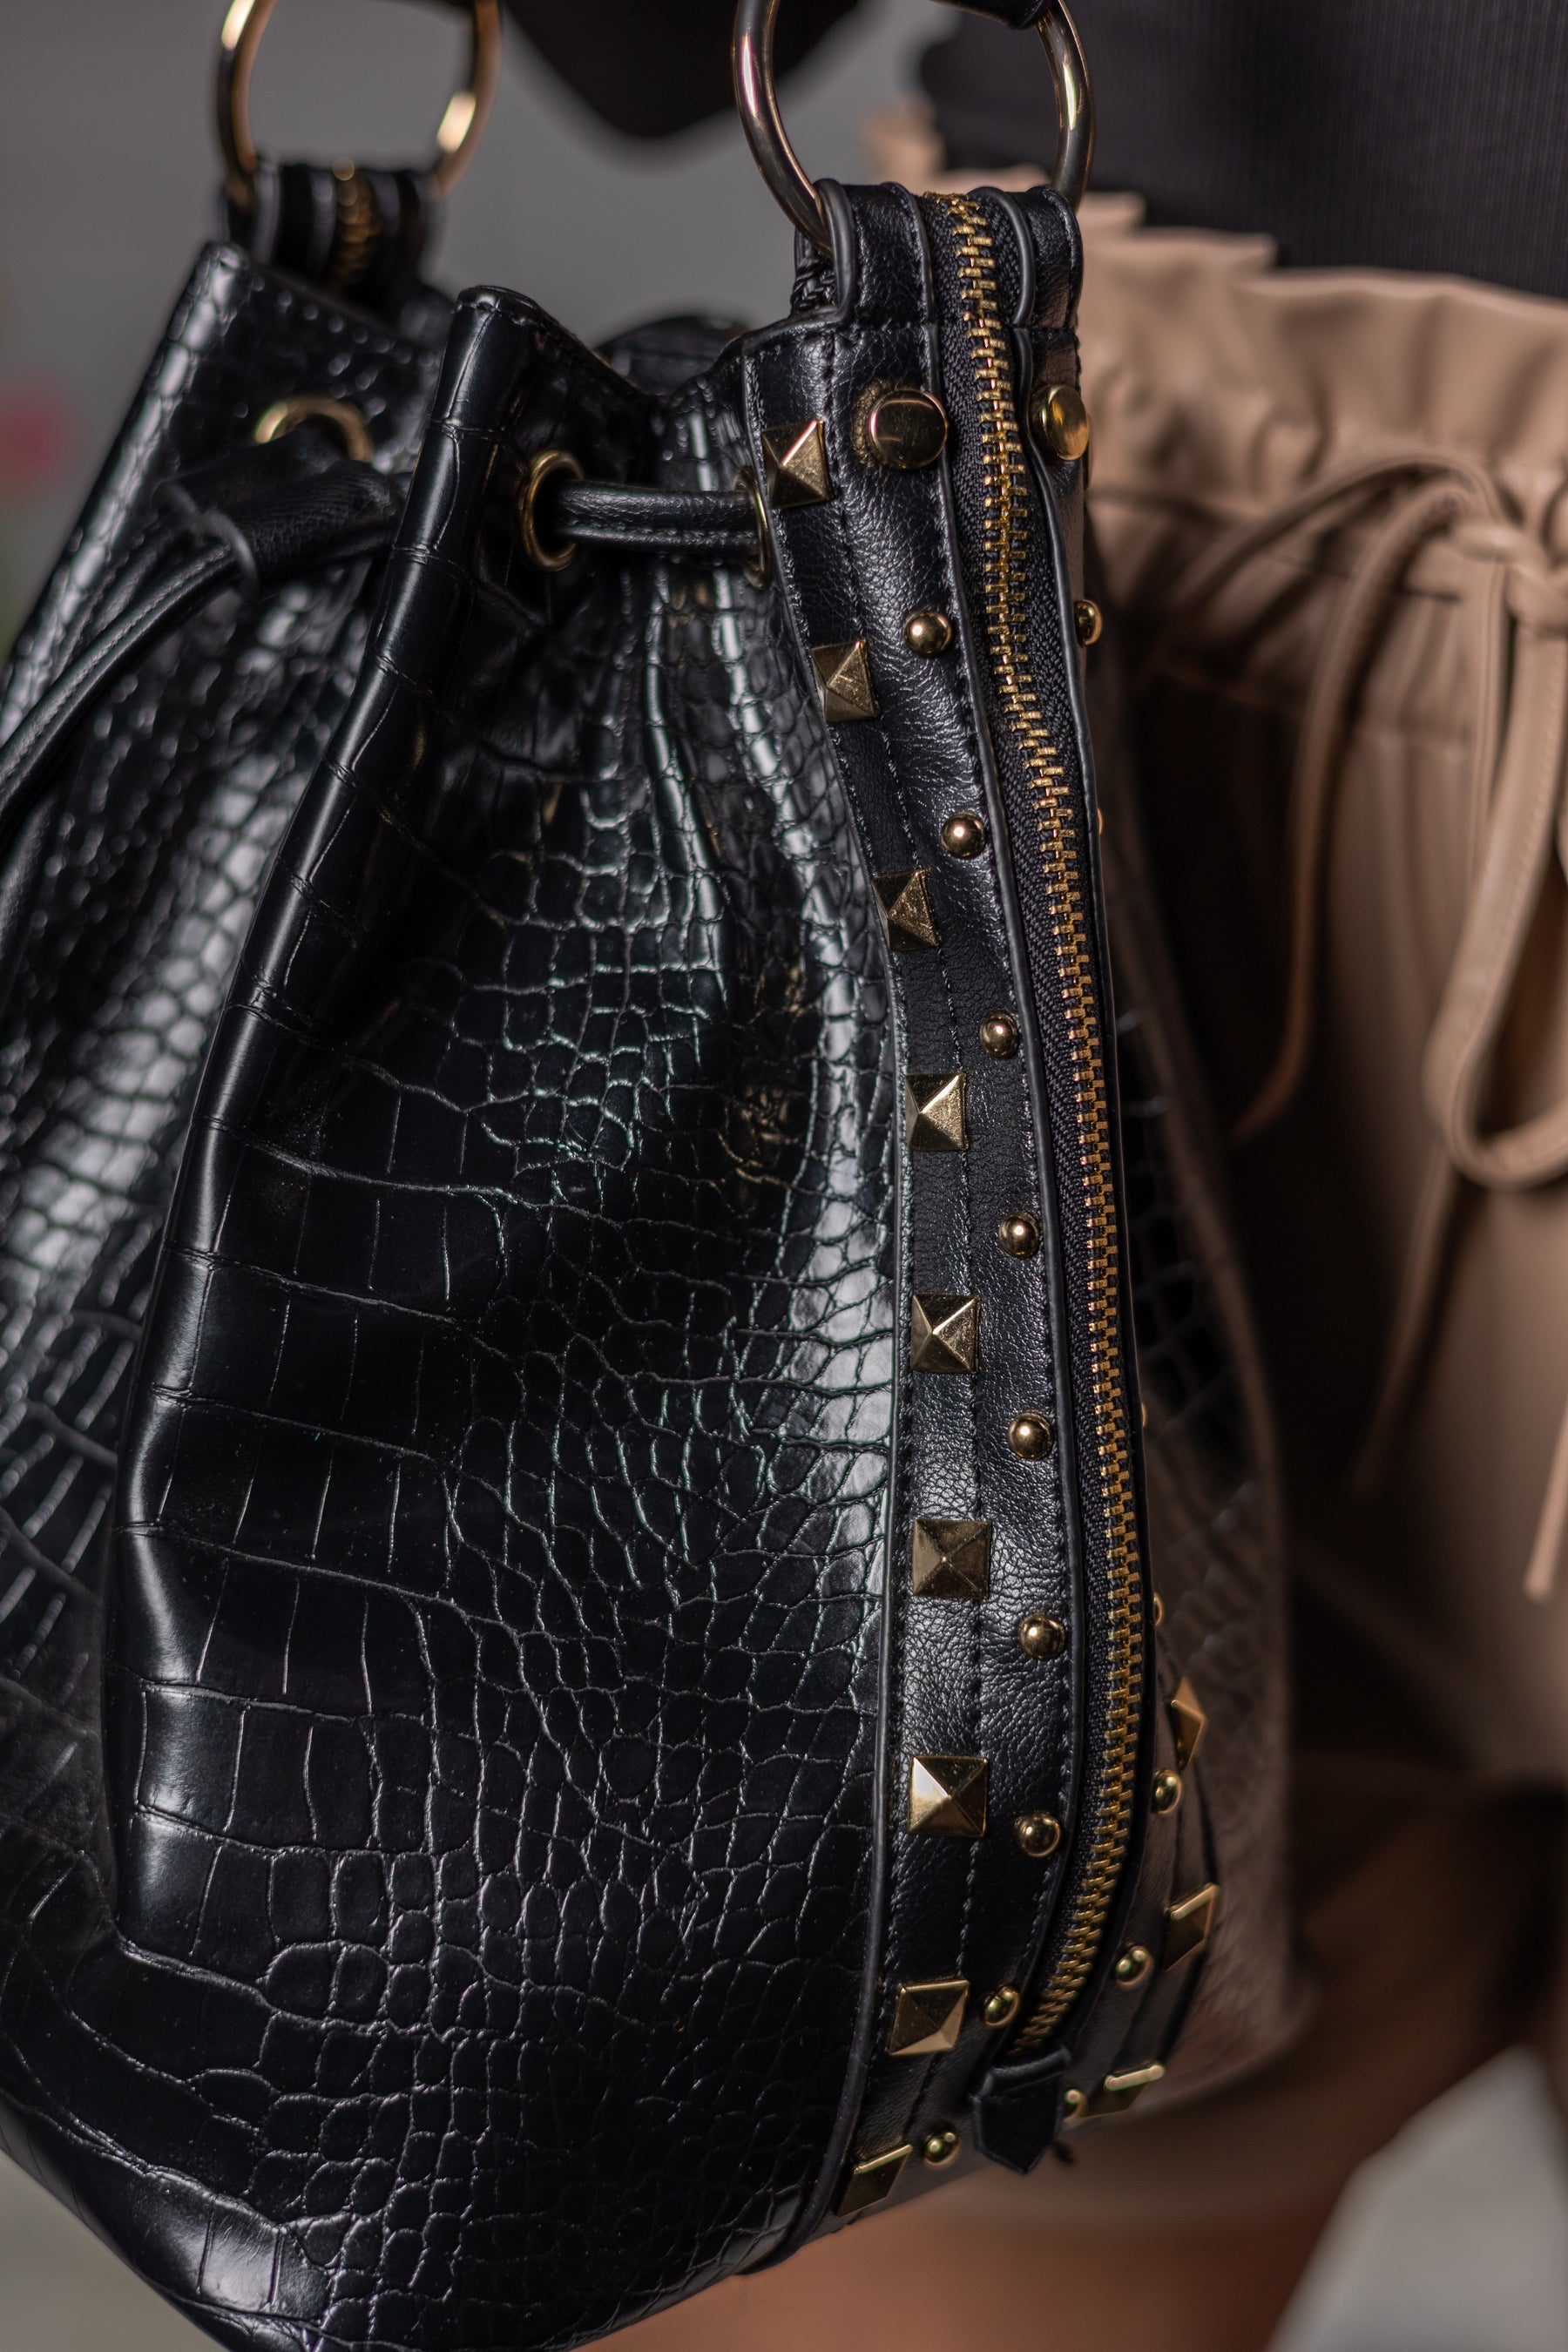 Stunning Studded Handbag Monari Black